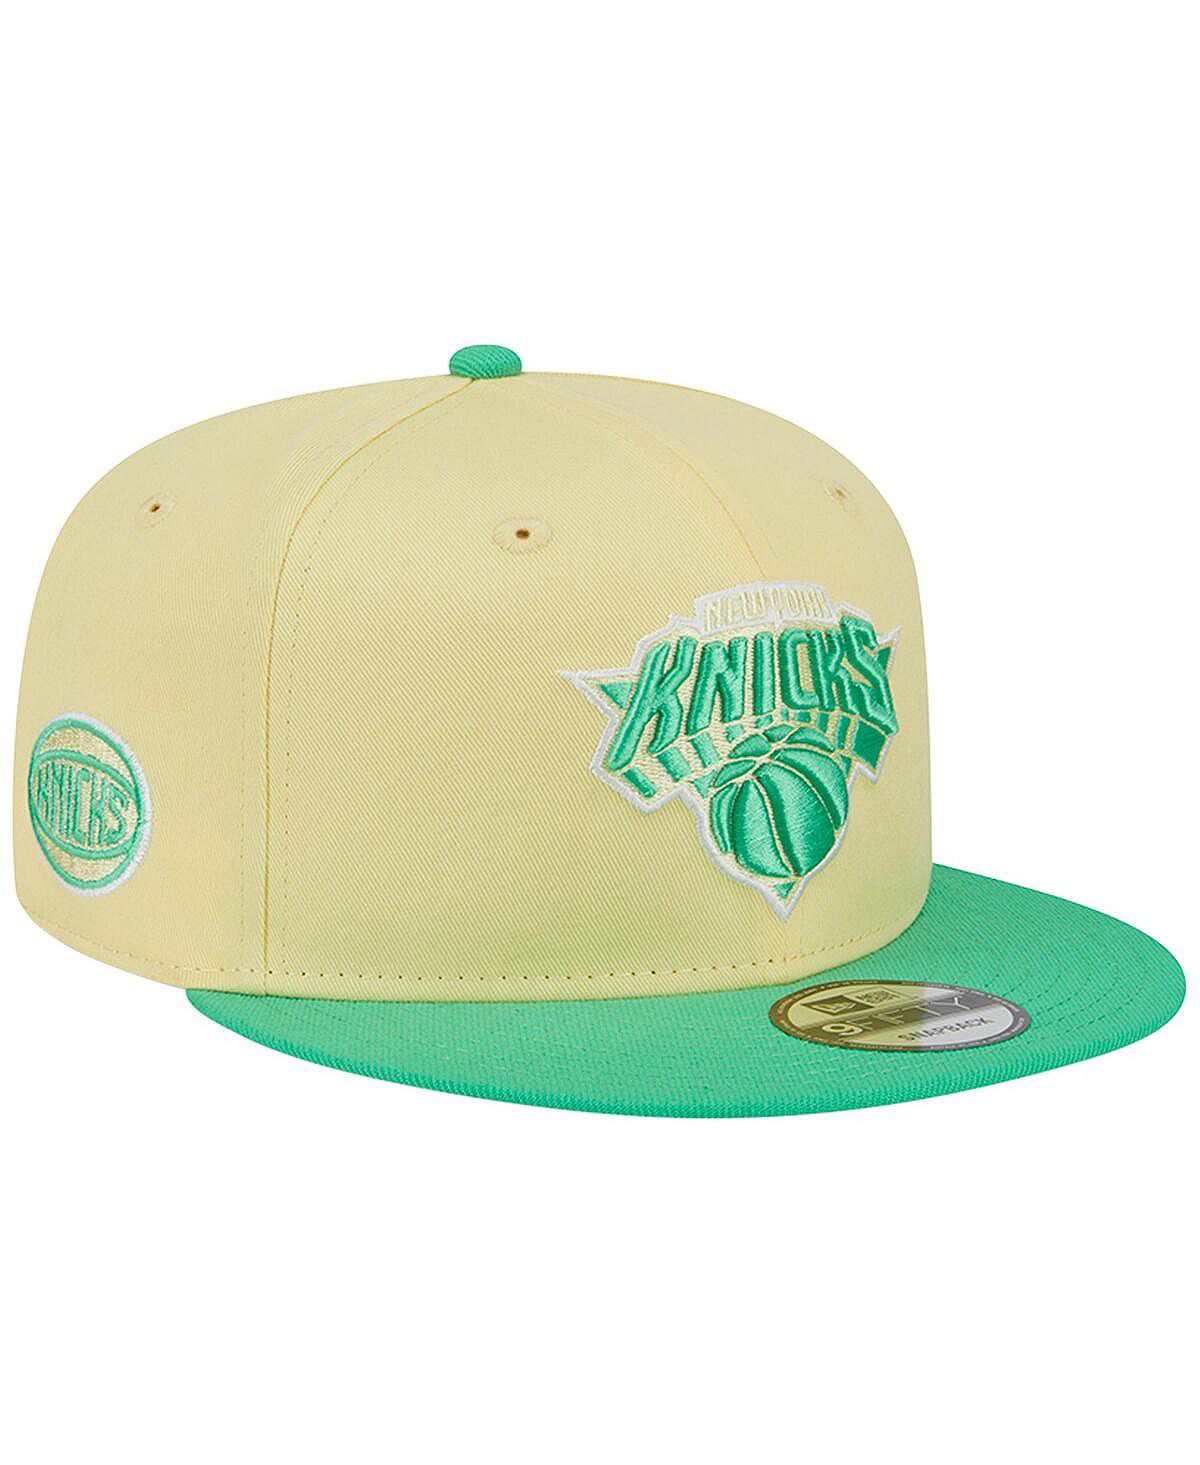 Мужская желто-зеленая кепка New York Knicks 9FIFTY New Era